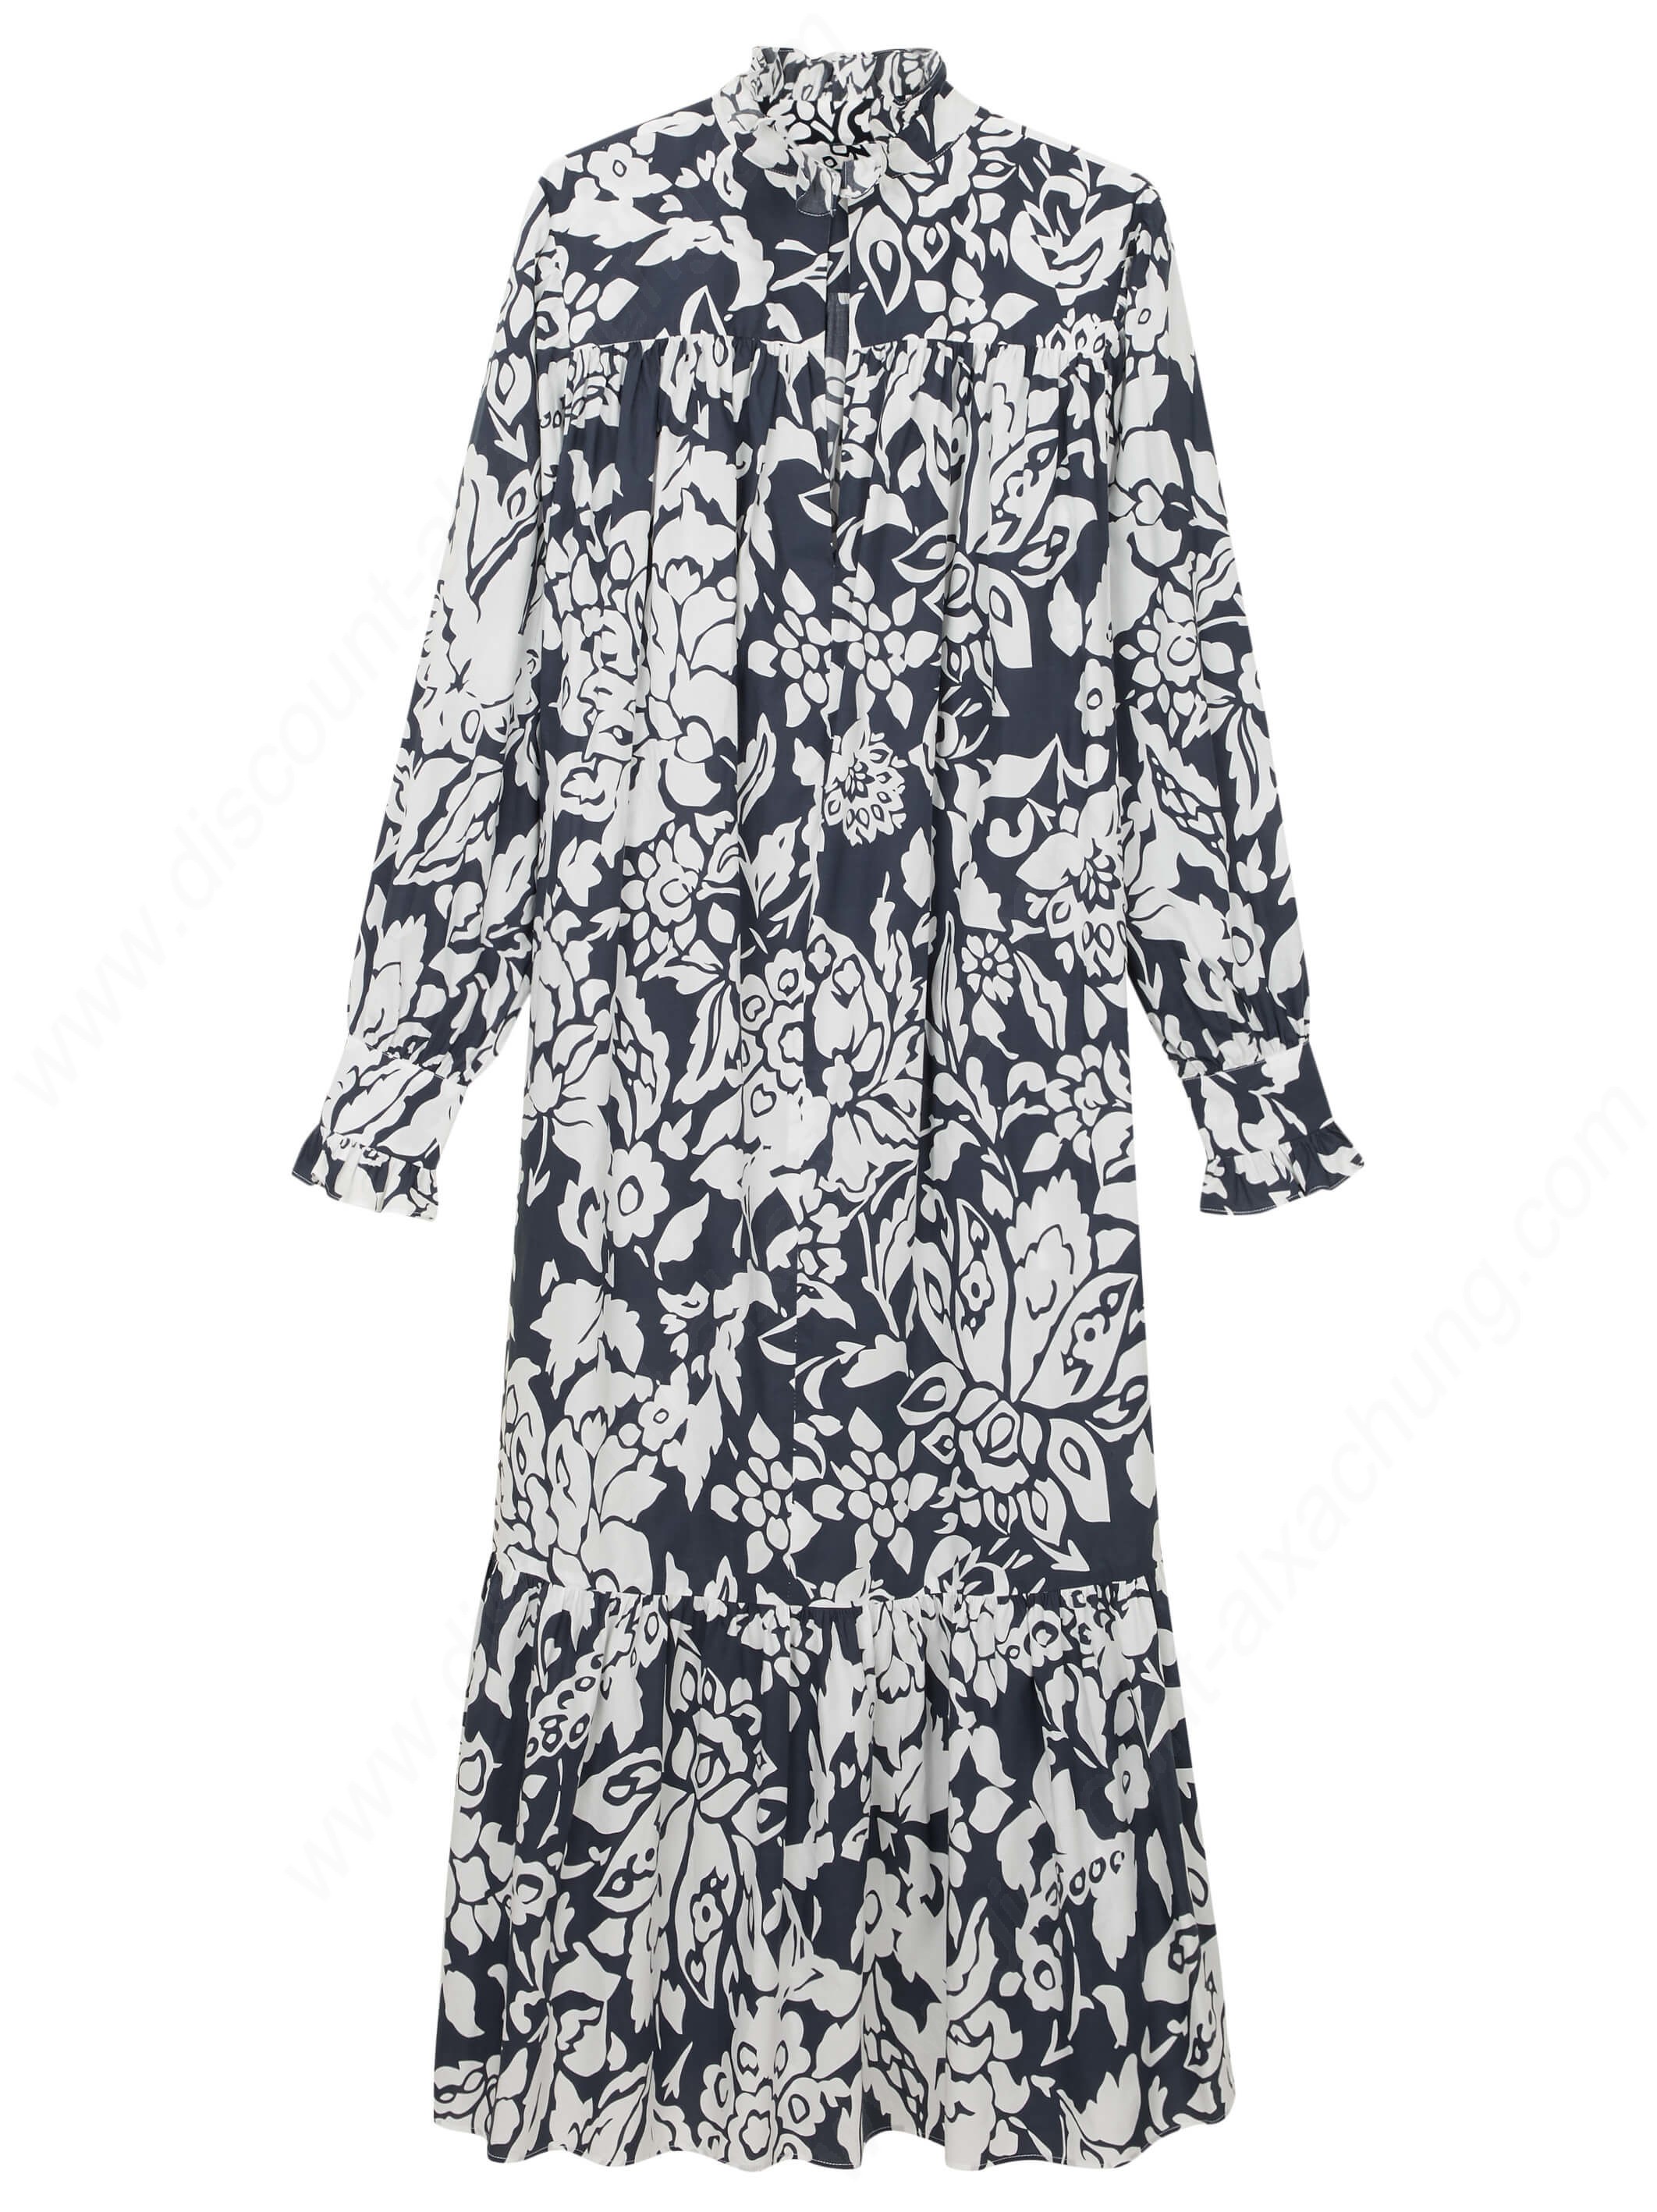 Alexachung Print Ruffle Collar Dress - Alexachung Print Ruffle Collar Dress